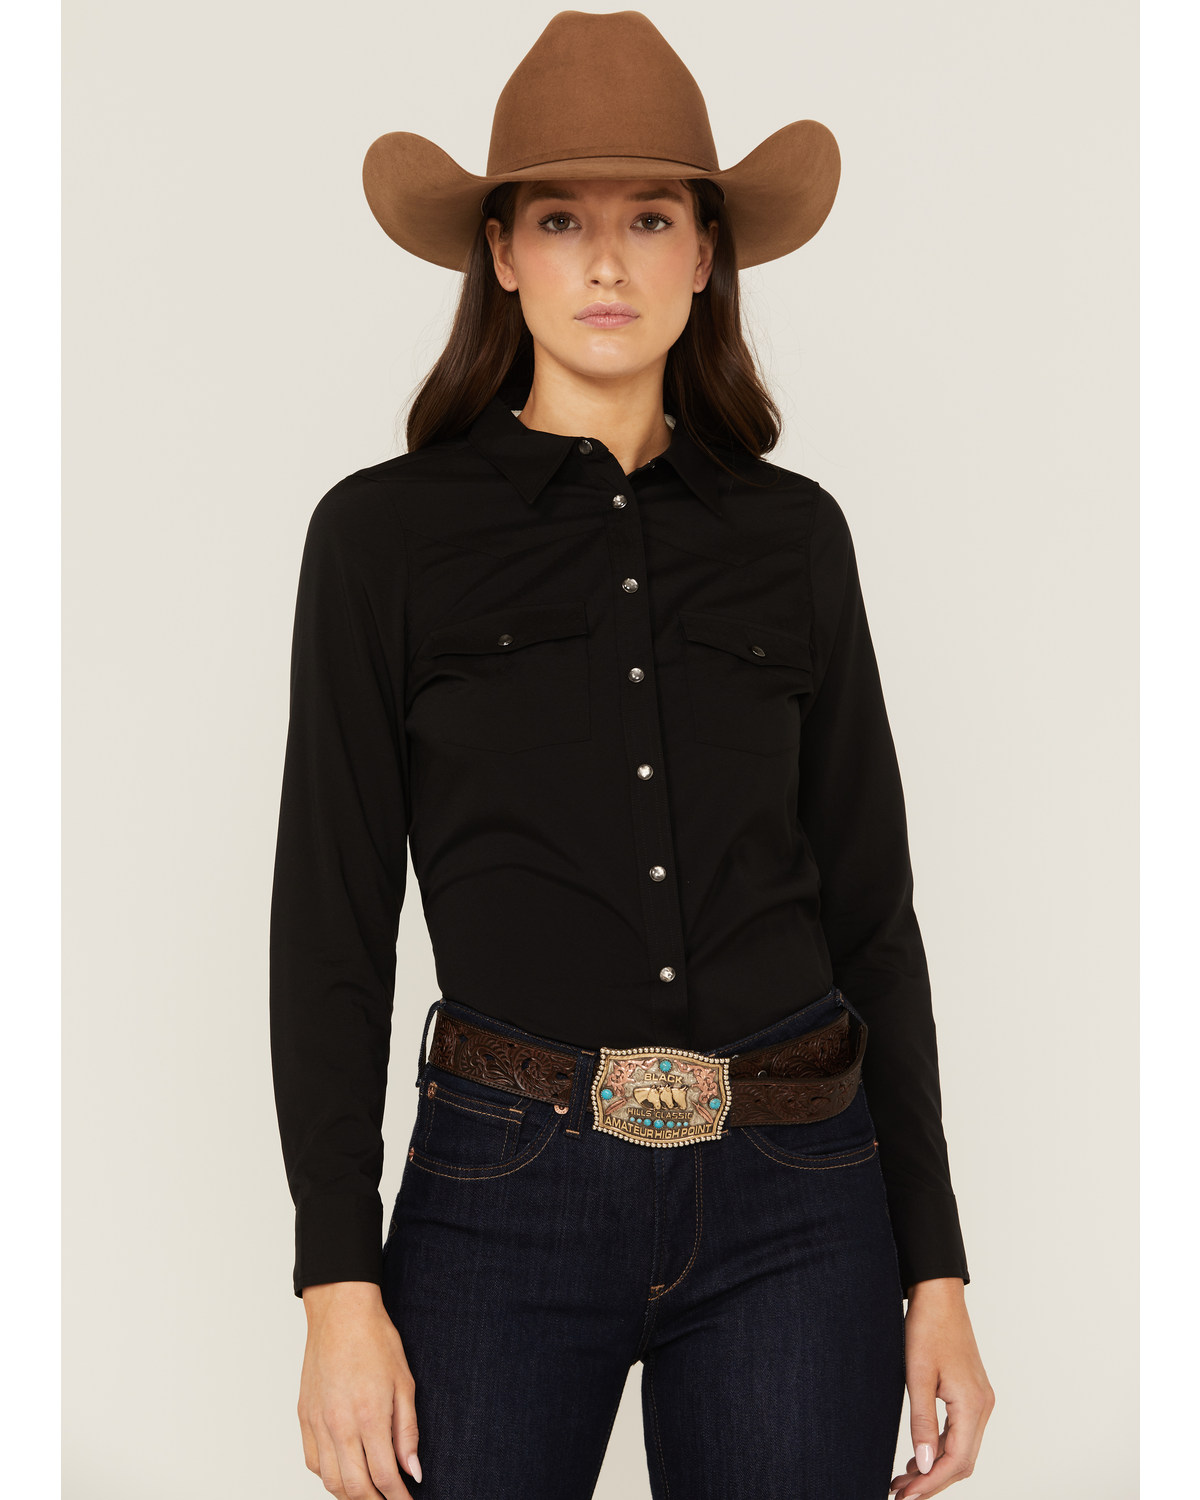 RANK 45® Women's Outdoor Vented York Riding Long Sleeve Snap Western Shirt